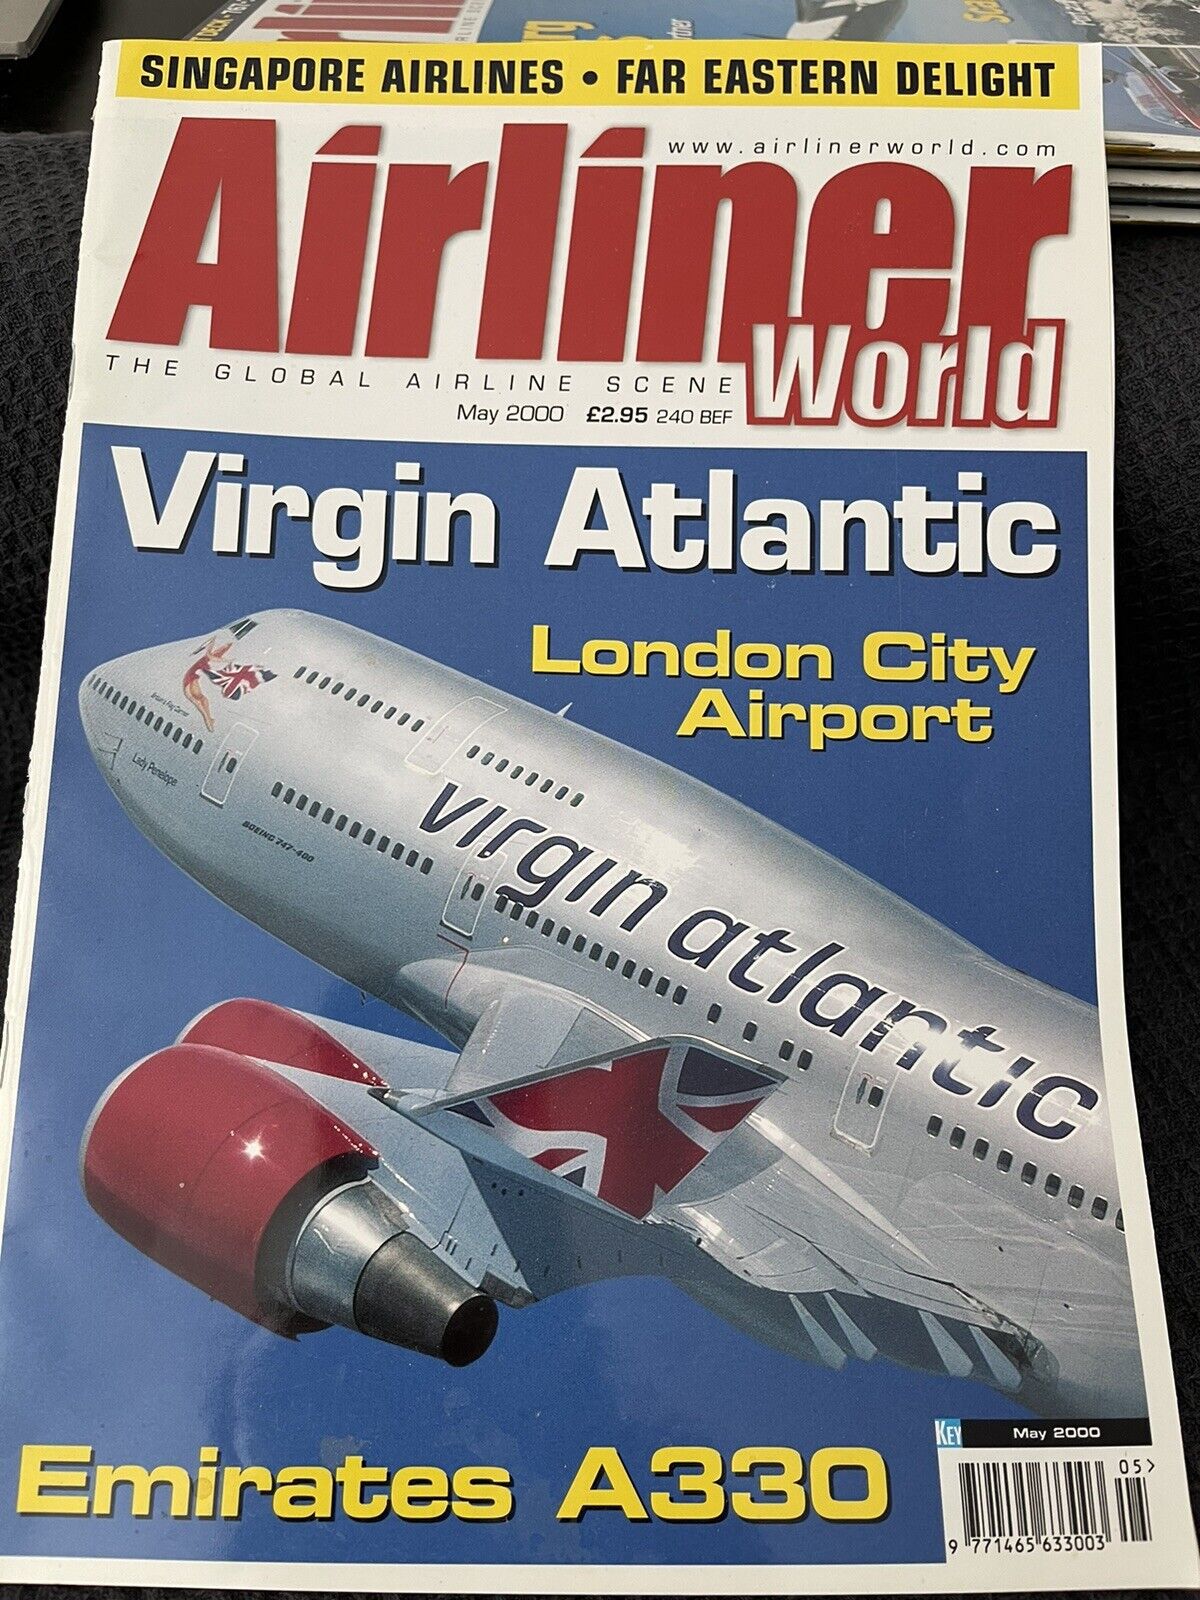 Airliner World - MAY2000, Virgin Atlantic, London City Airport, Emirates A330